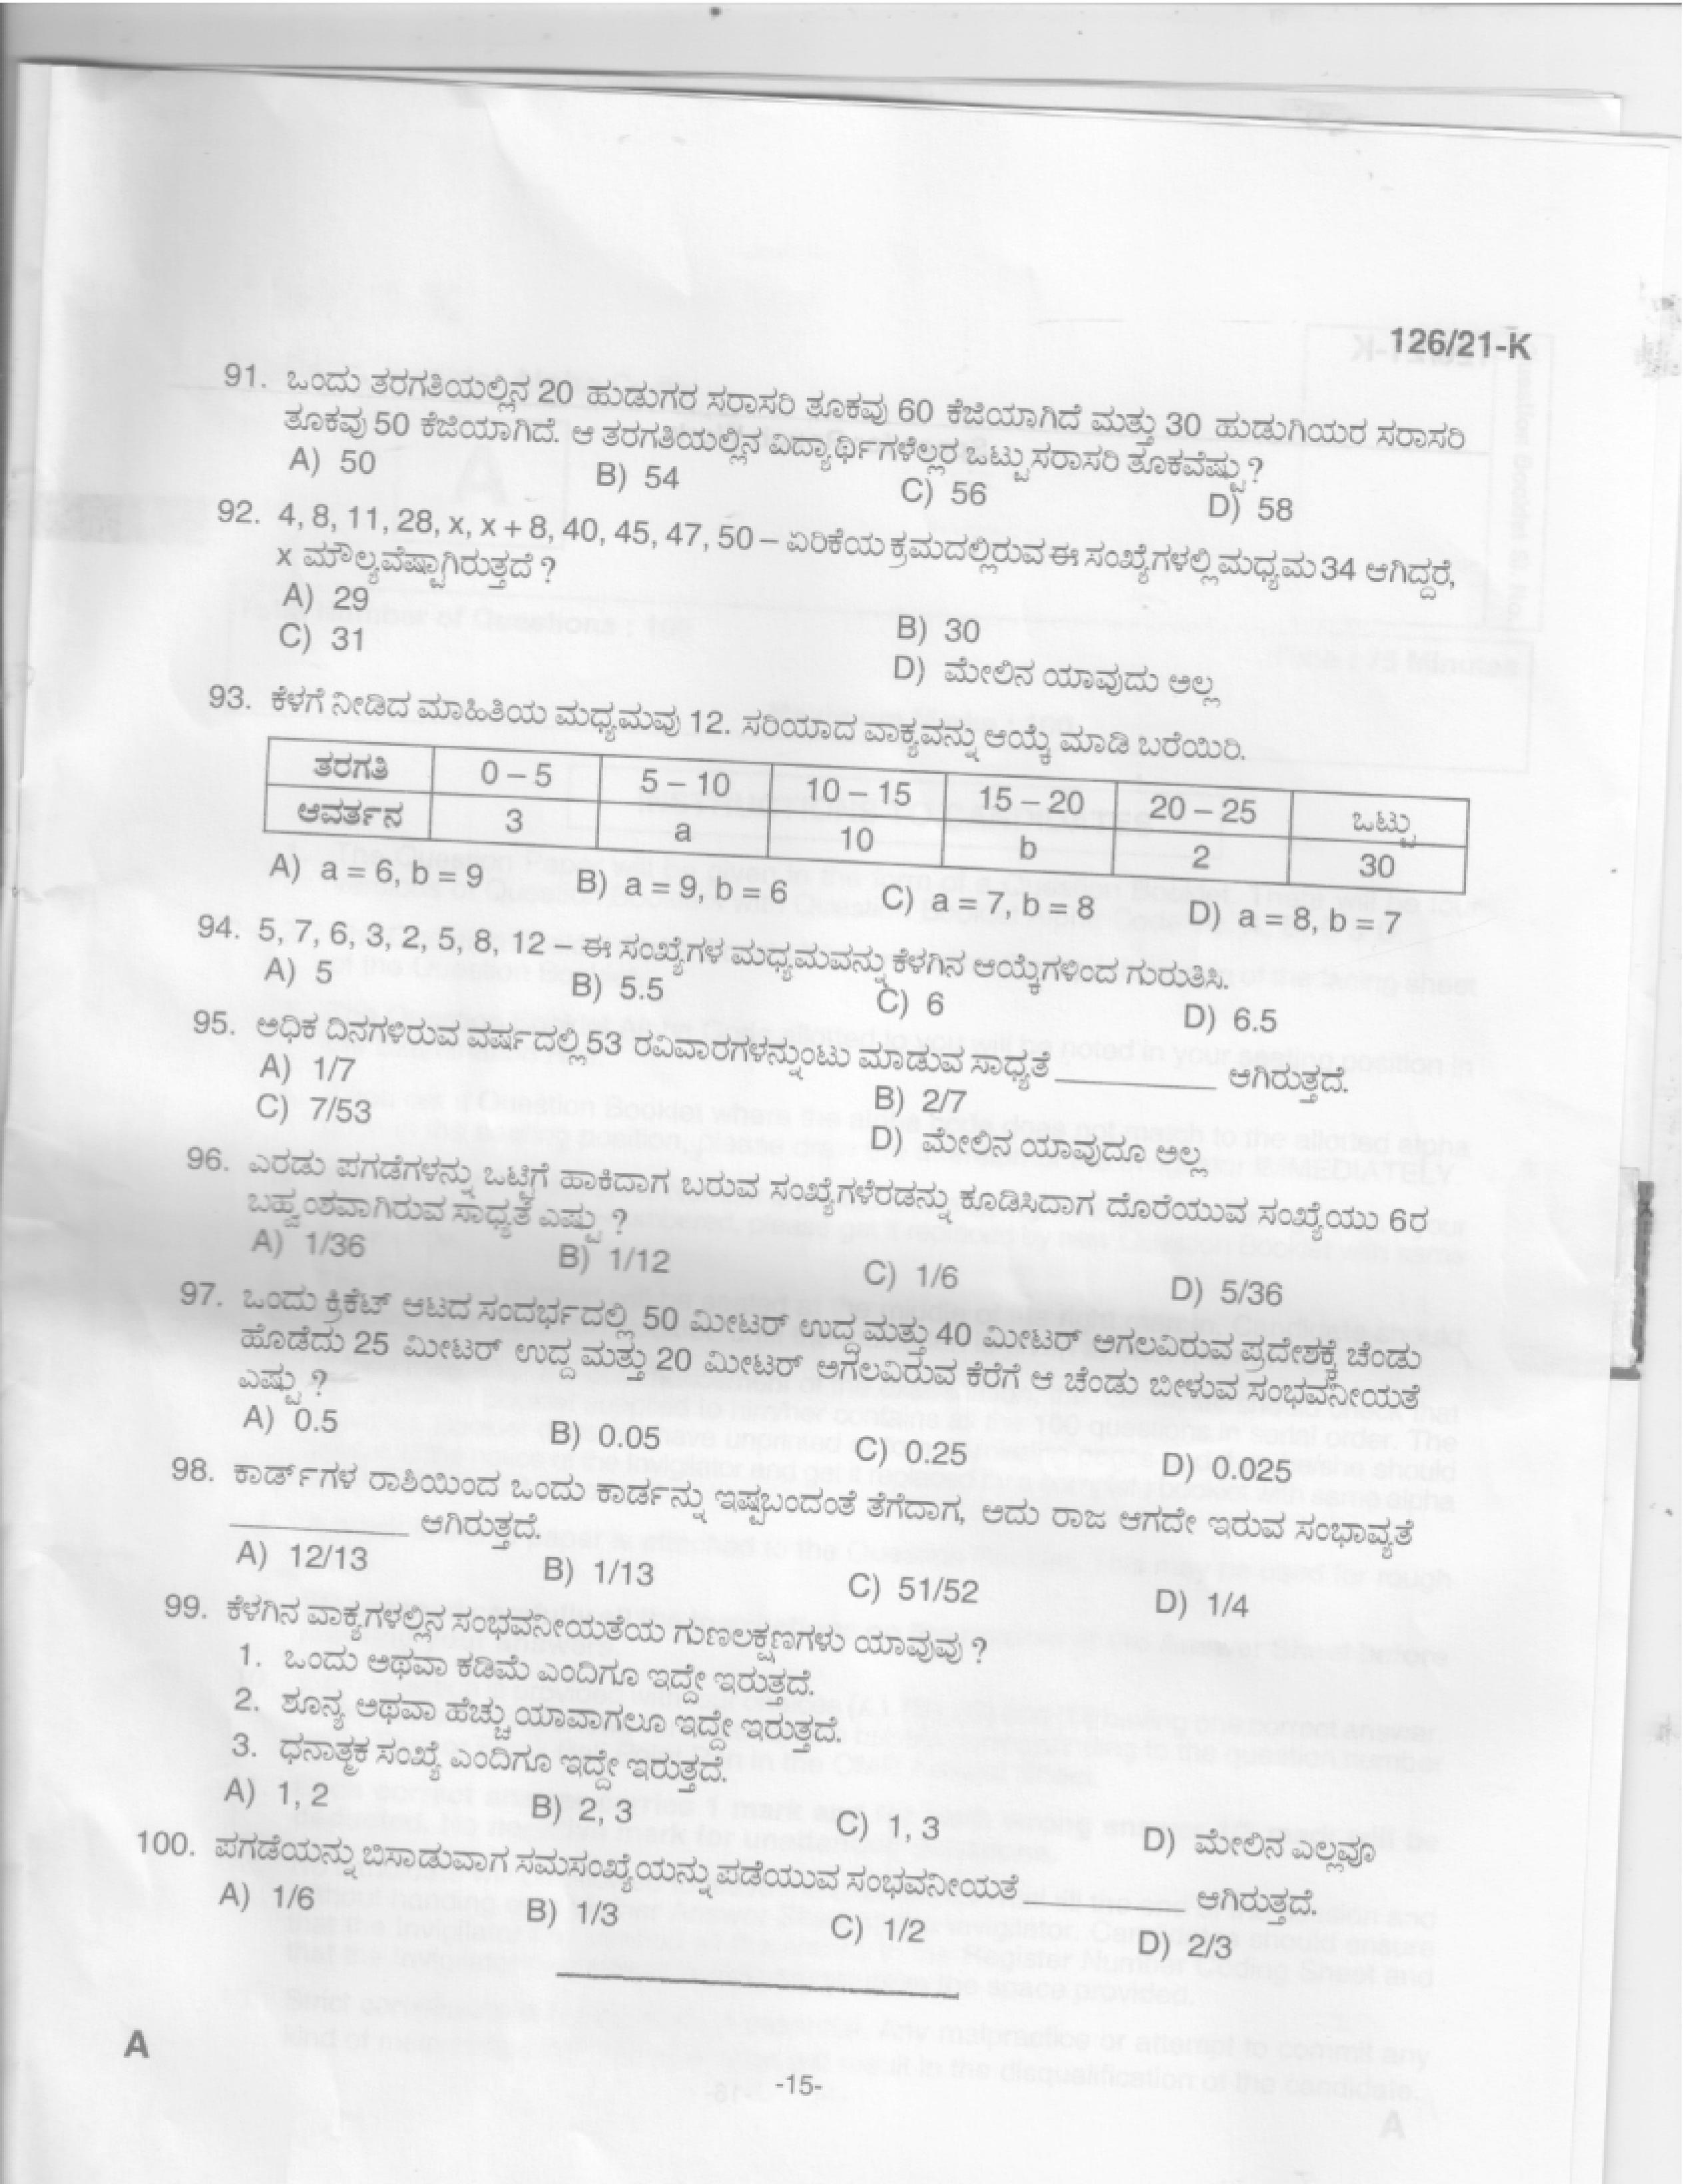 Upto SSLC Level Main Exam Assistant Compiler Kannada 2021 Code 1262021 K 13